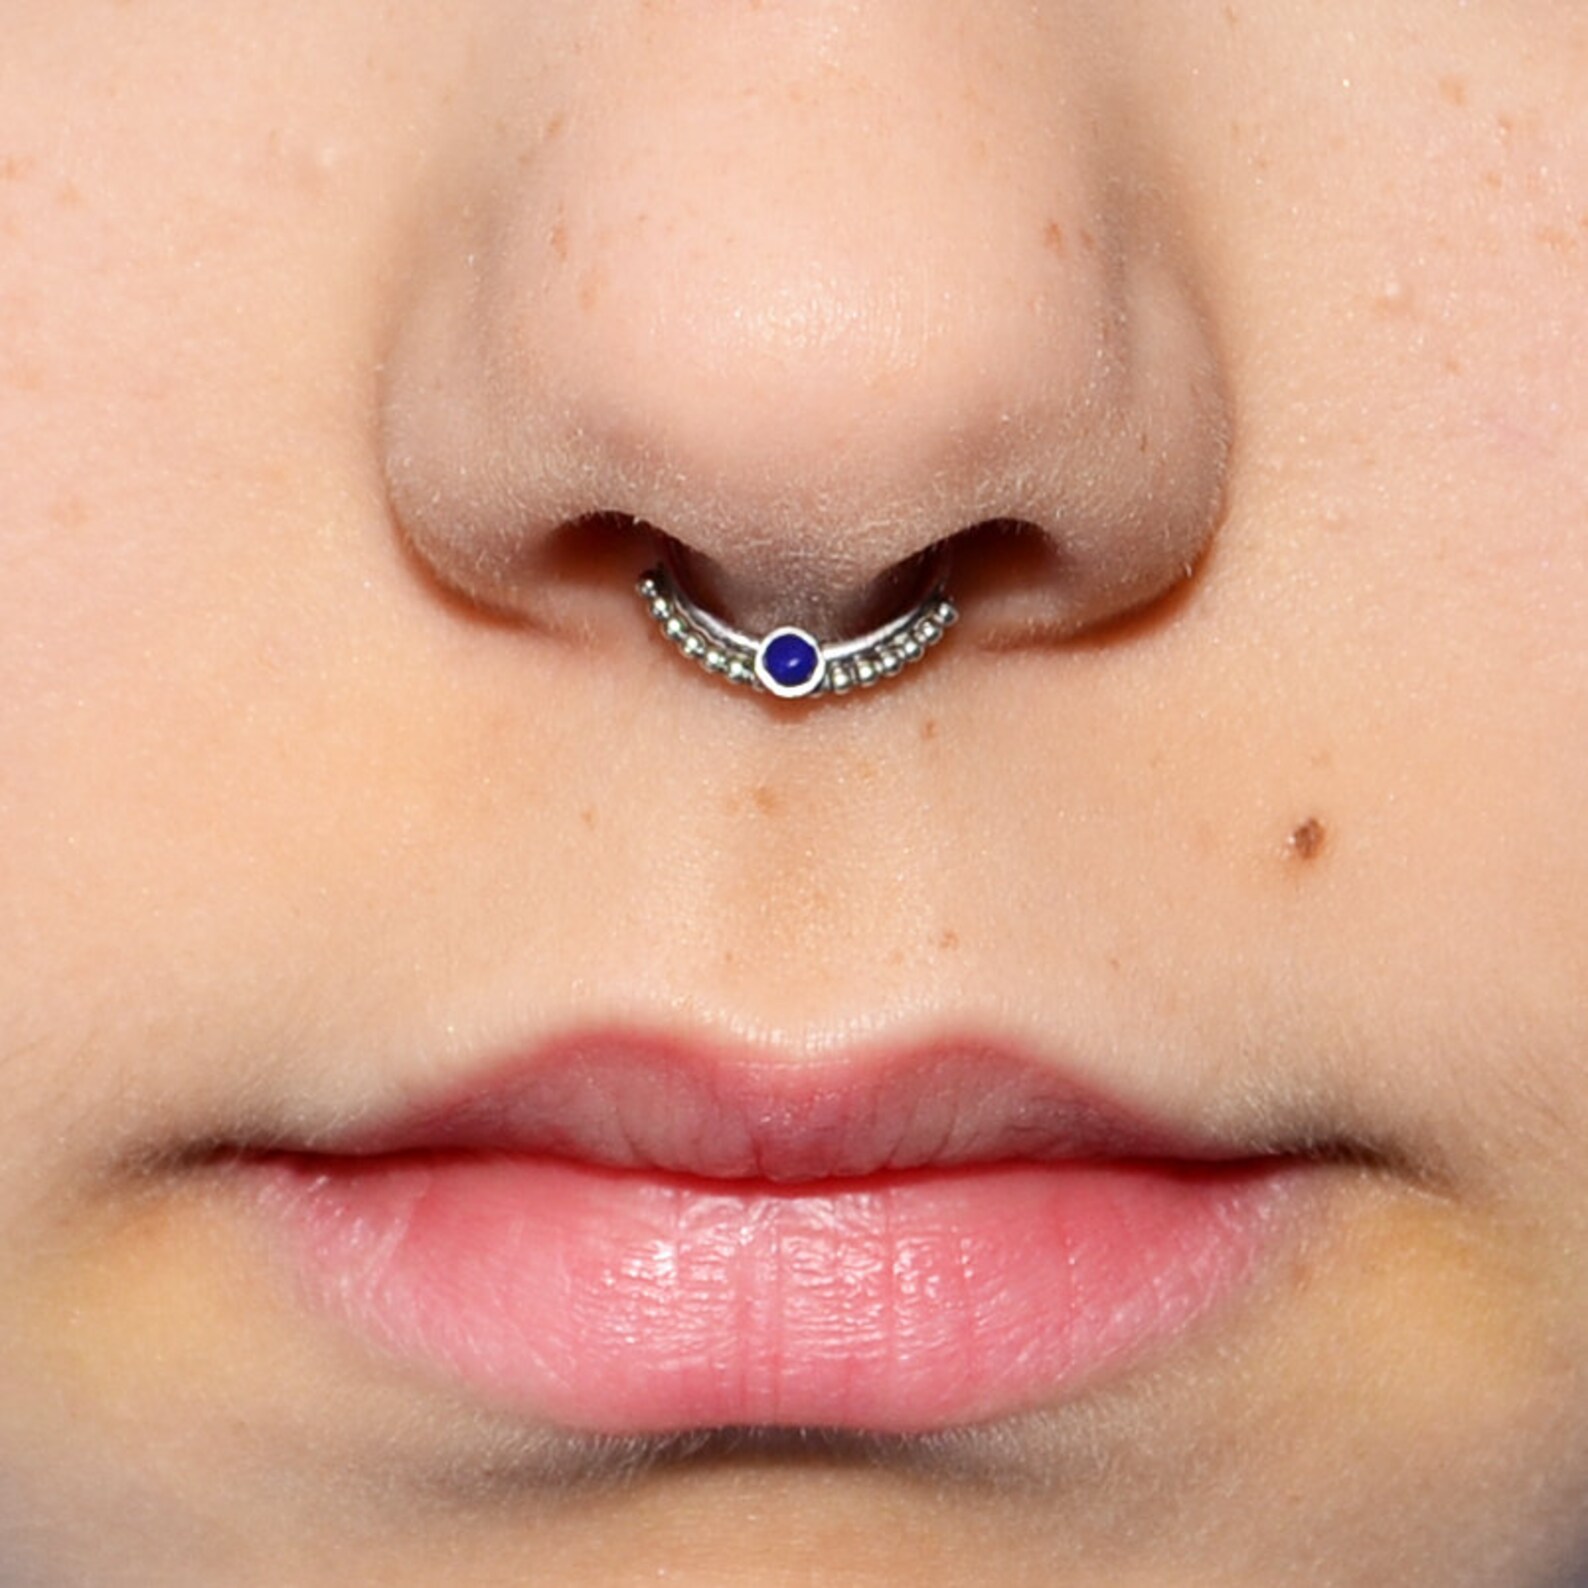 2mm Lapis SEPTUM RING / nose ring, septum piercing, 16g cartilage earring, ...